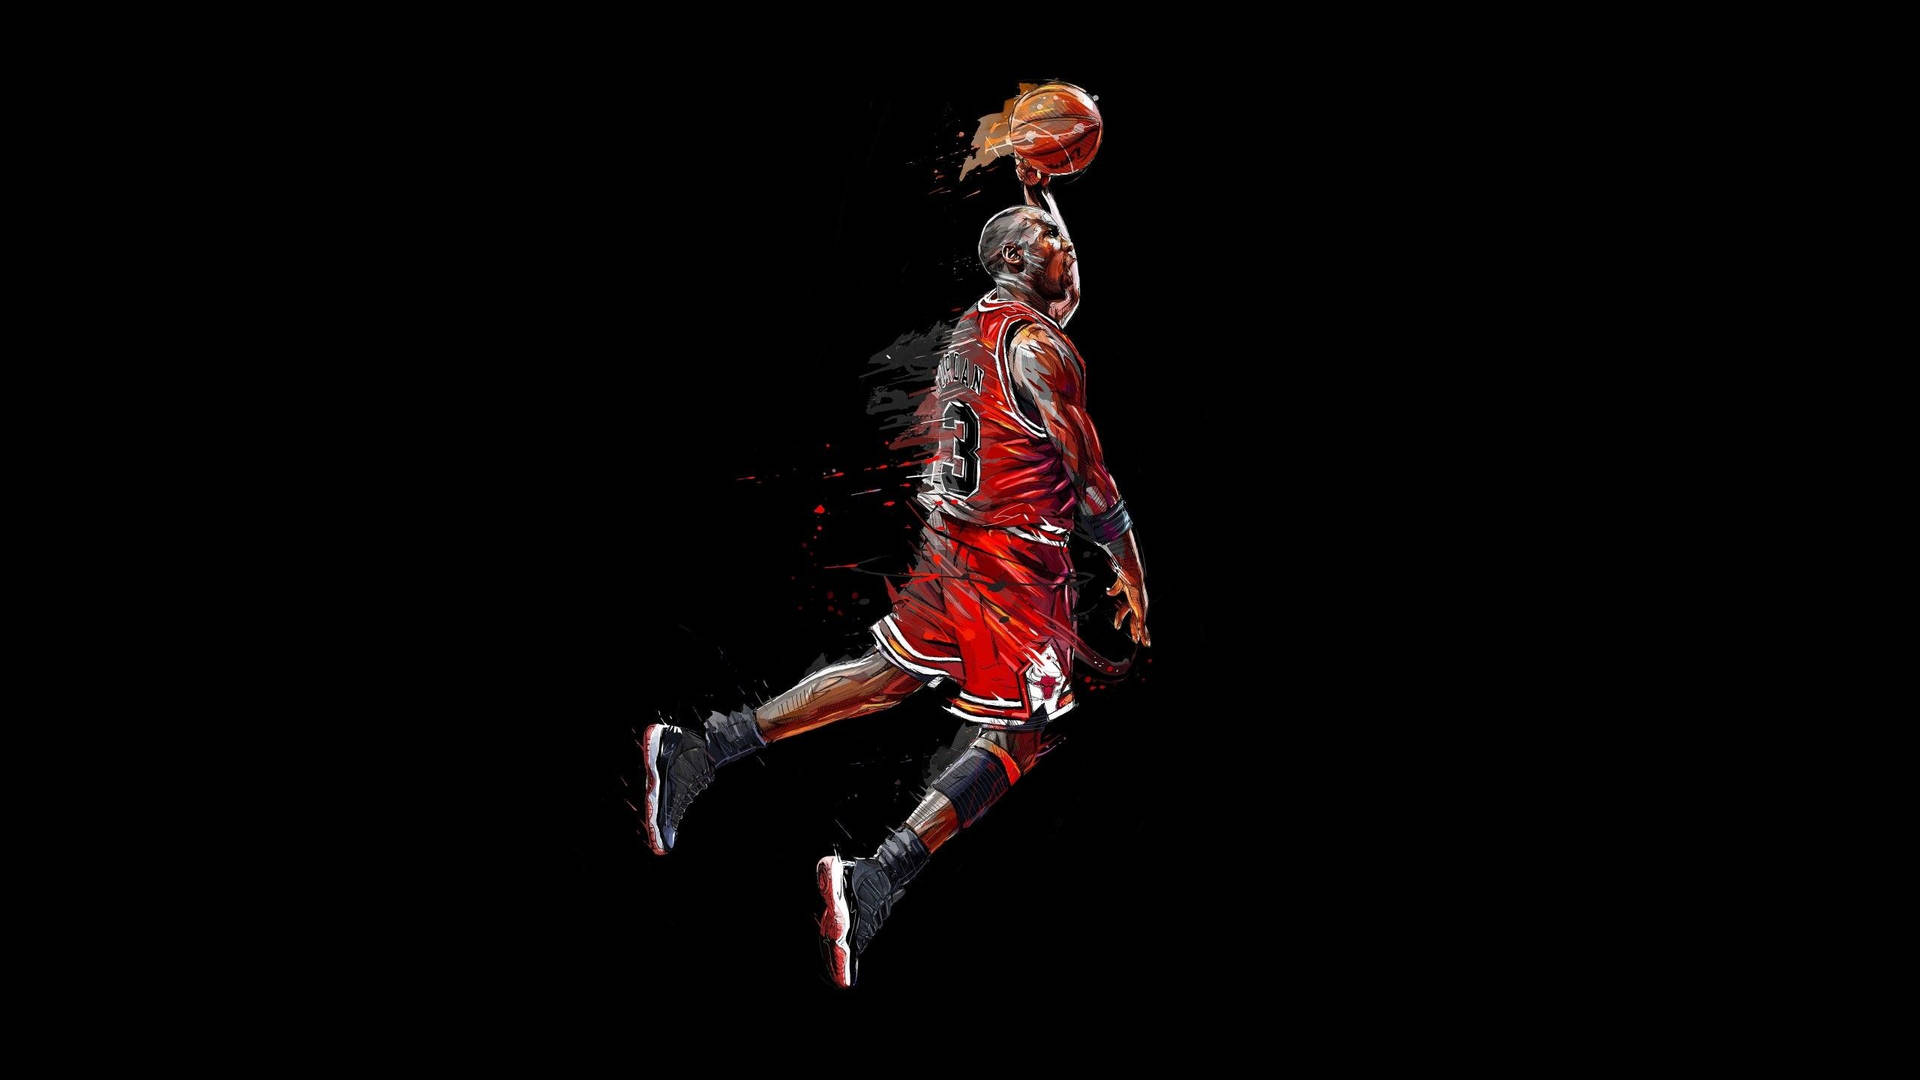 An artistic tribute to legendary basketball player Michael Jordan Wallpaper